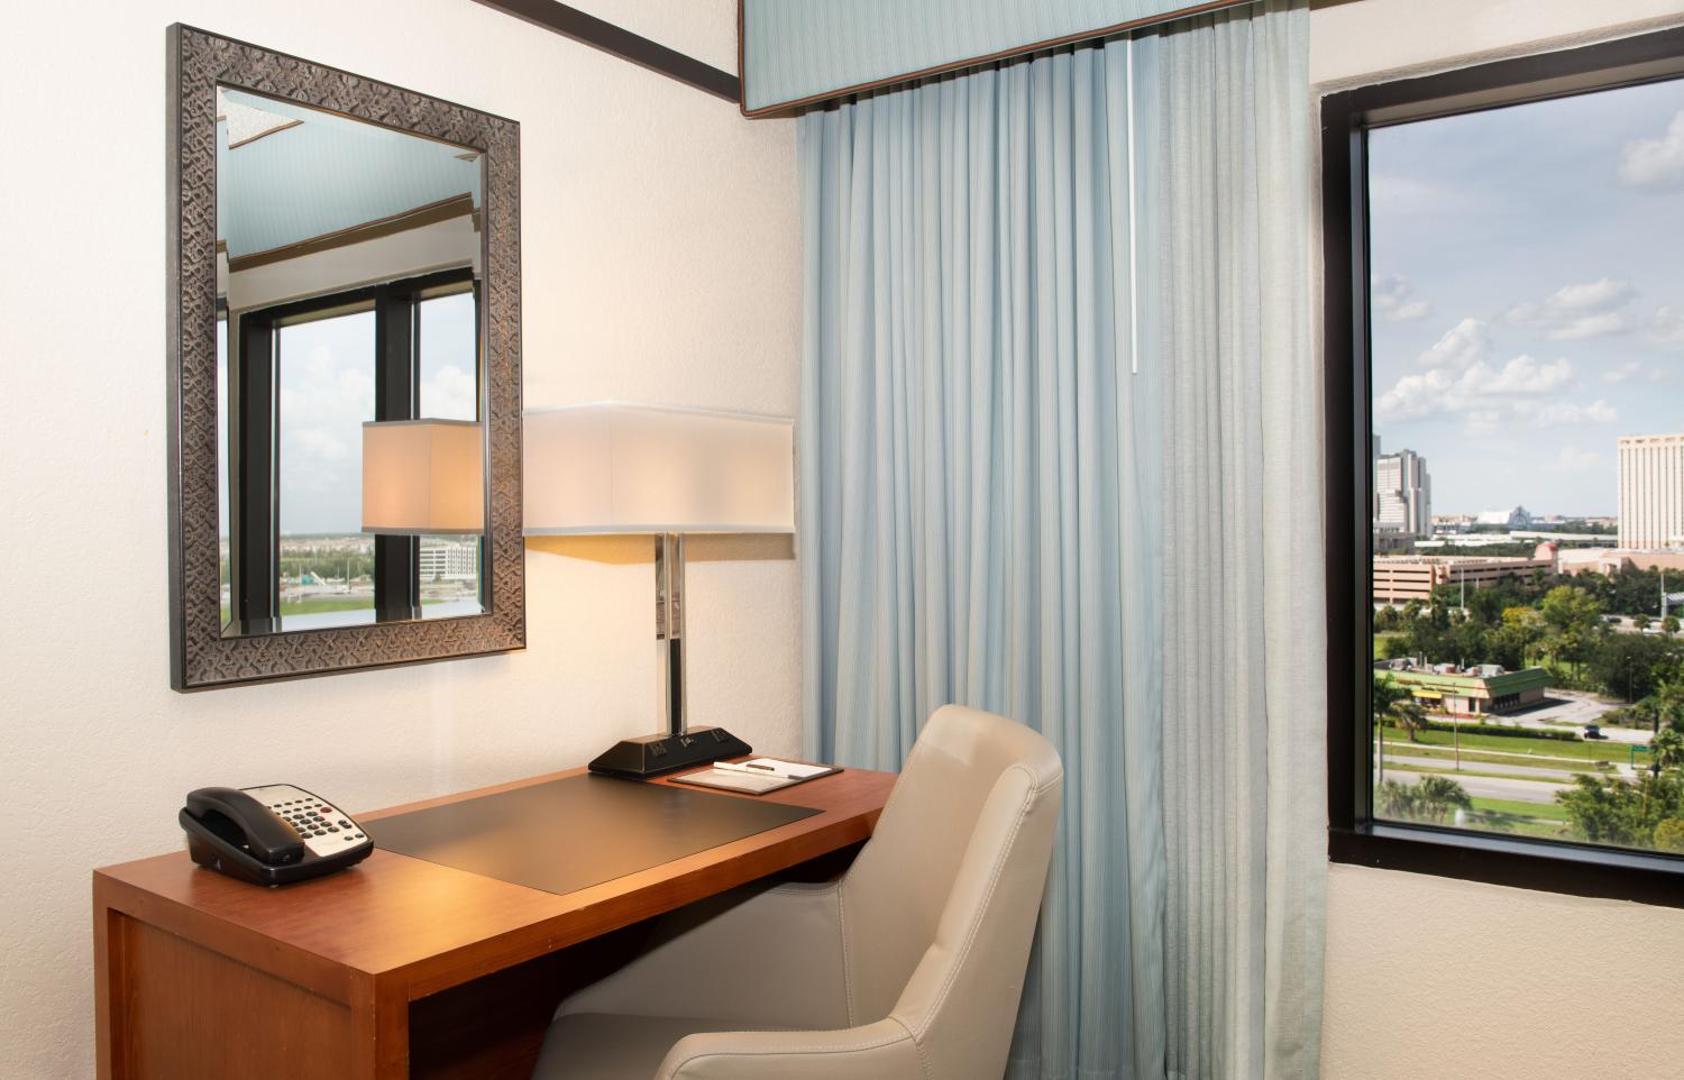 DoubleTree by Hilton Hotel Orlando at SeaWorld